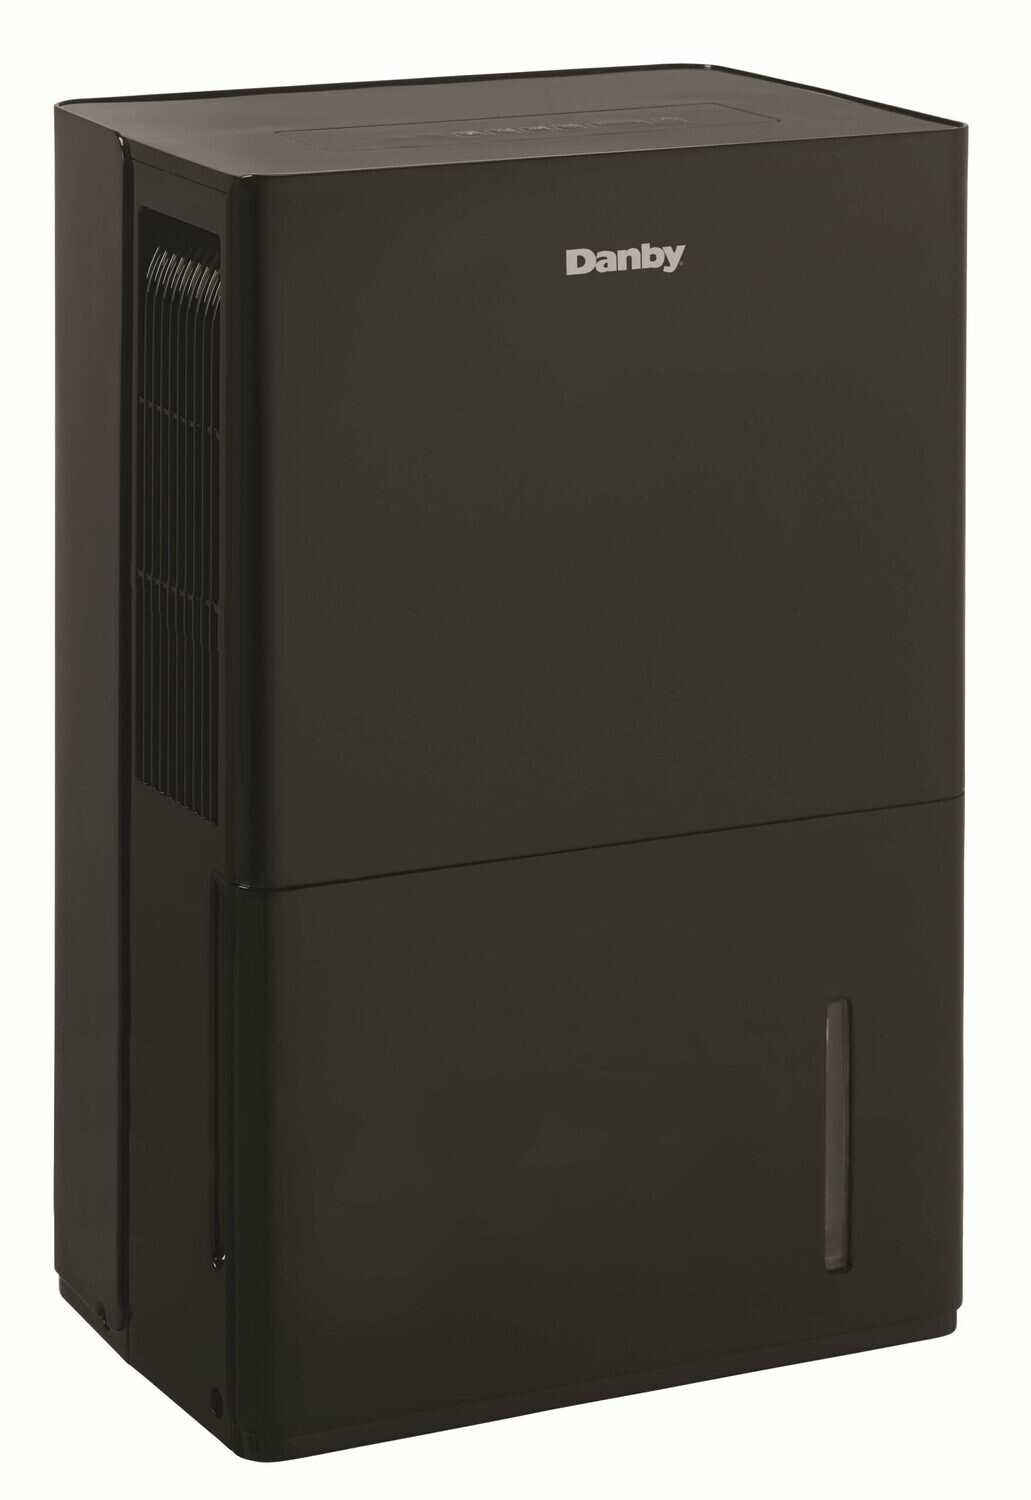 Danby 50 Pint Dehumidifier - Black (DDR050BLBDB-RF)